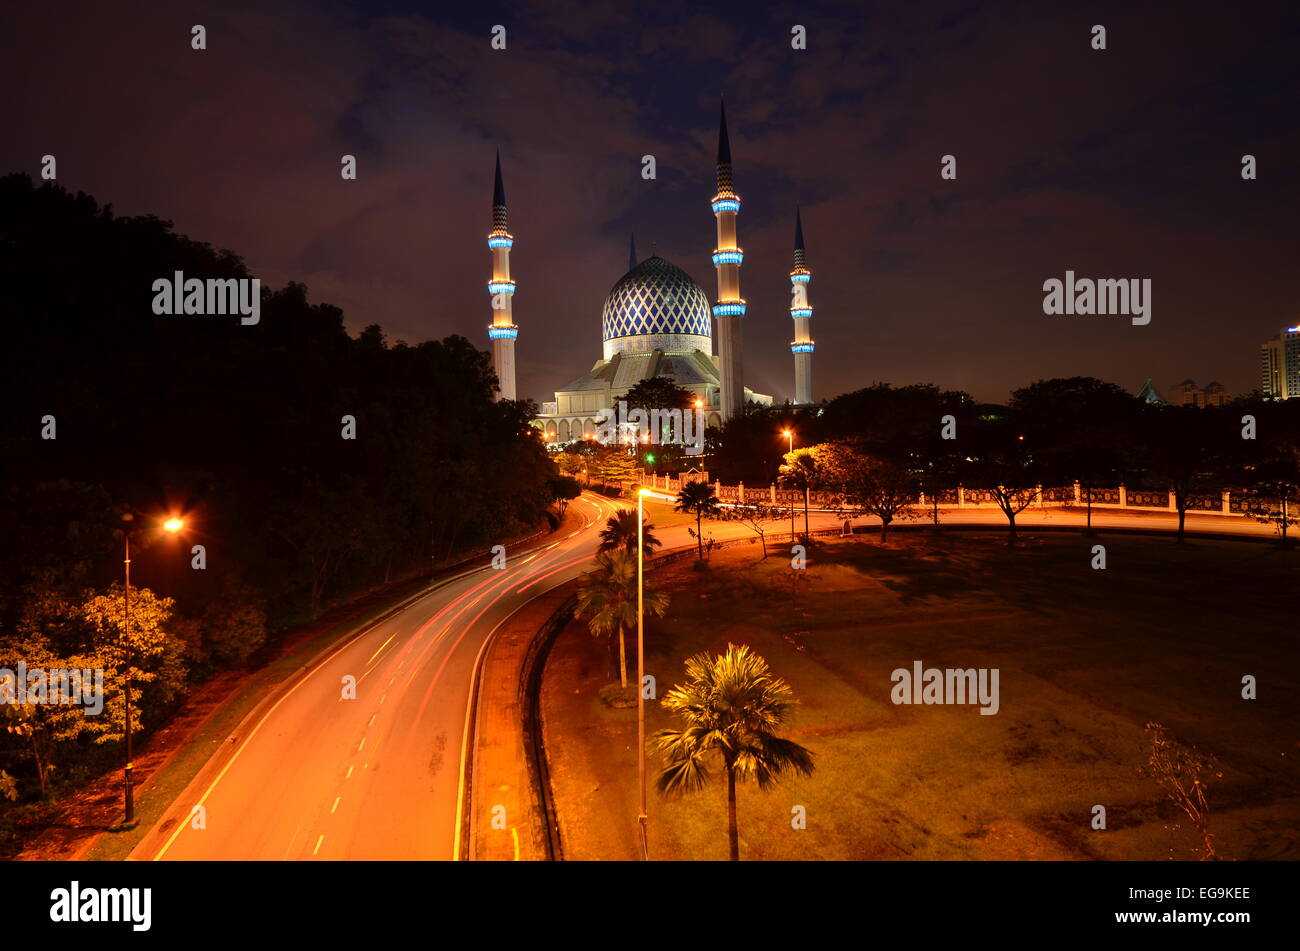 Malaysia, Shah Alam, Sultan Salahuddin Abdul Aziz Shah Mosque at night and illuminated road Stock Photo